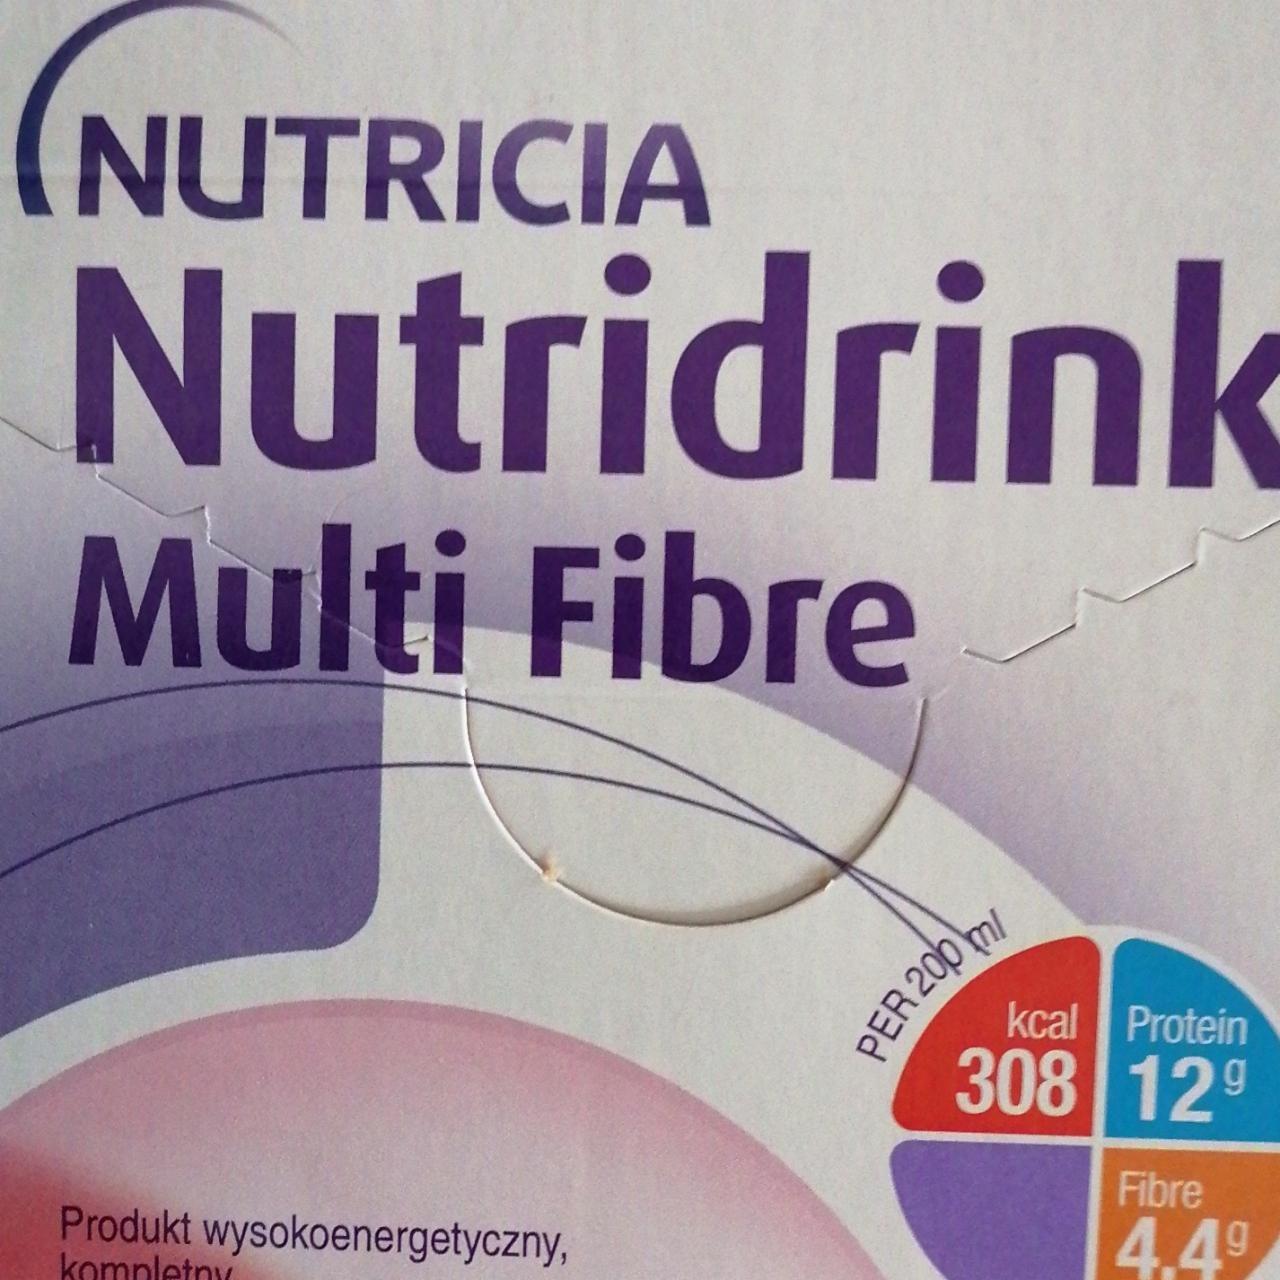 Képek - Nutridrink Multi Fibre eper Nutricia